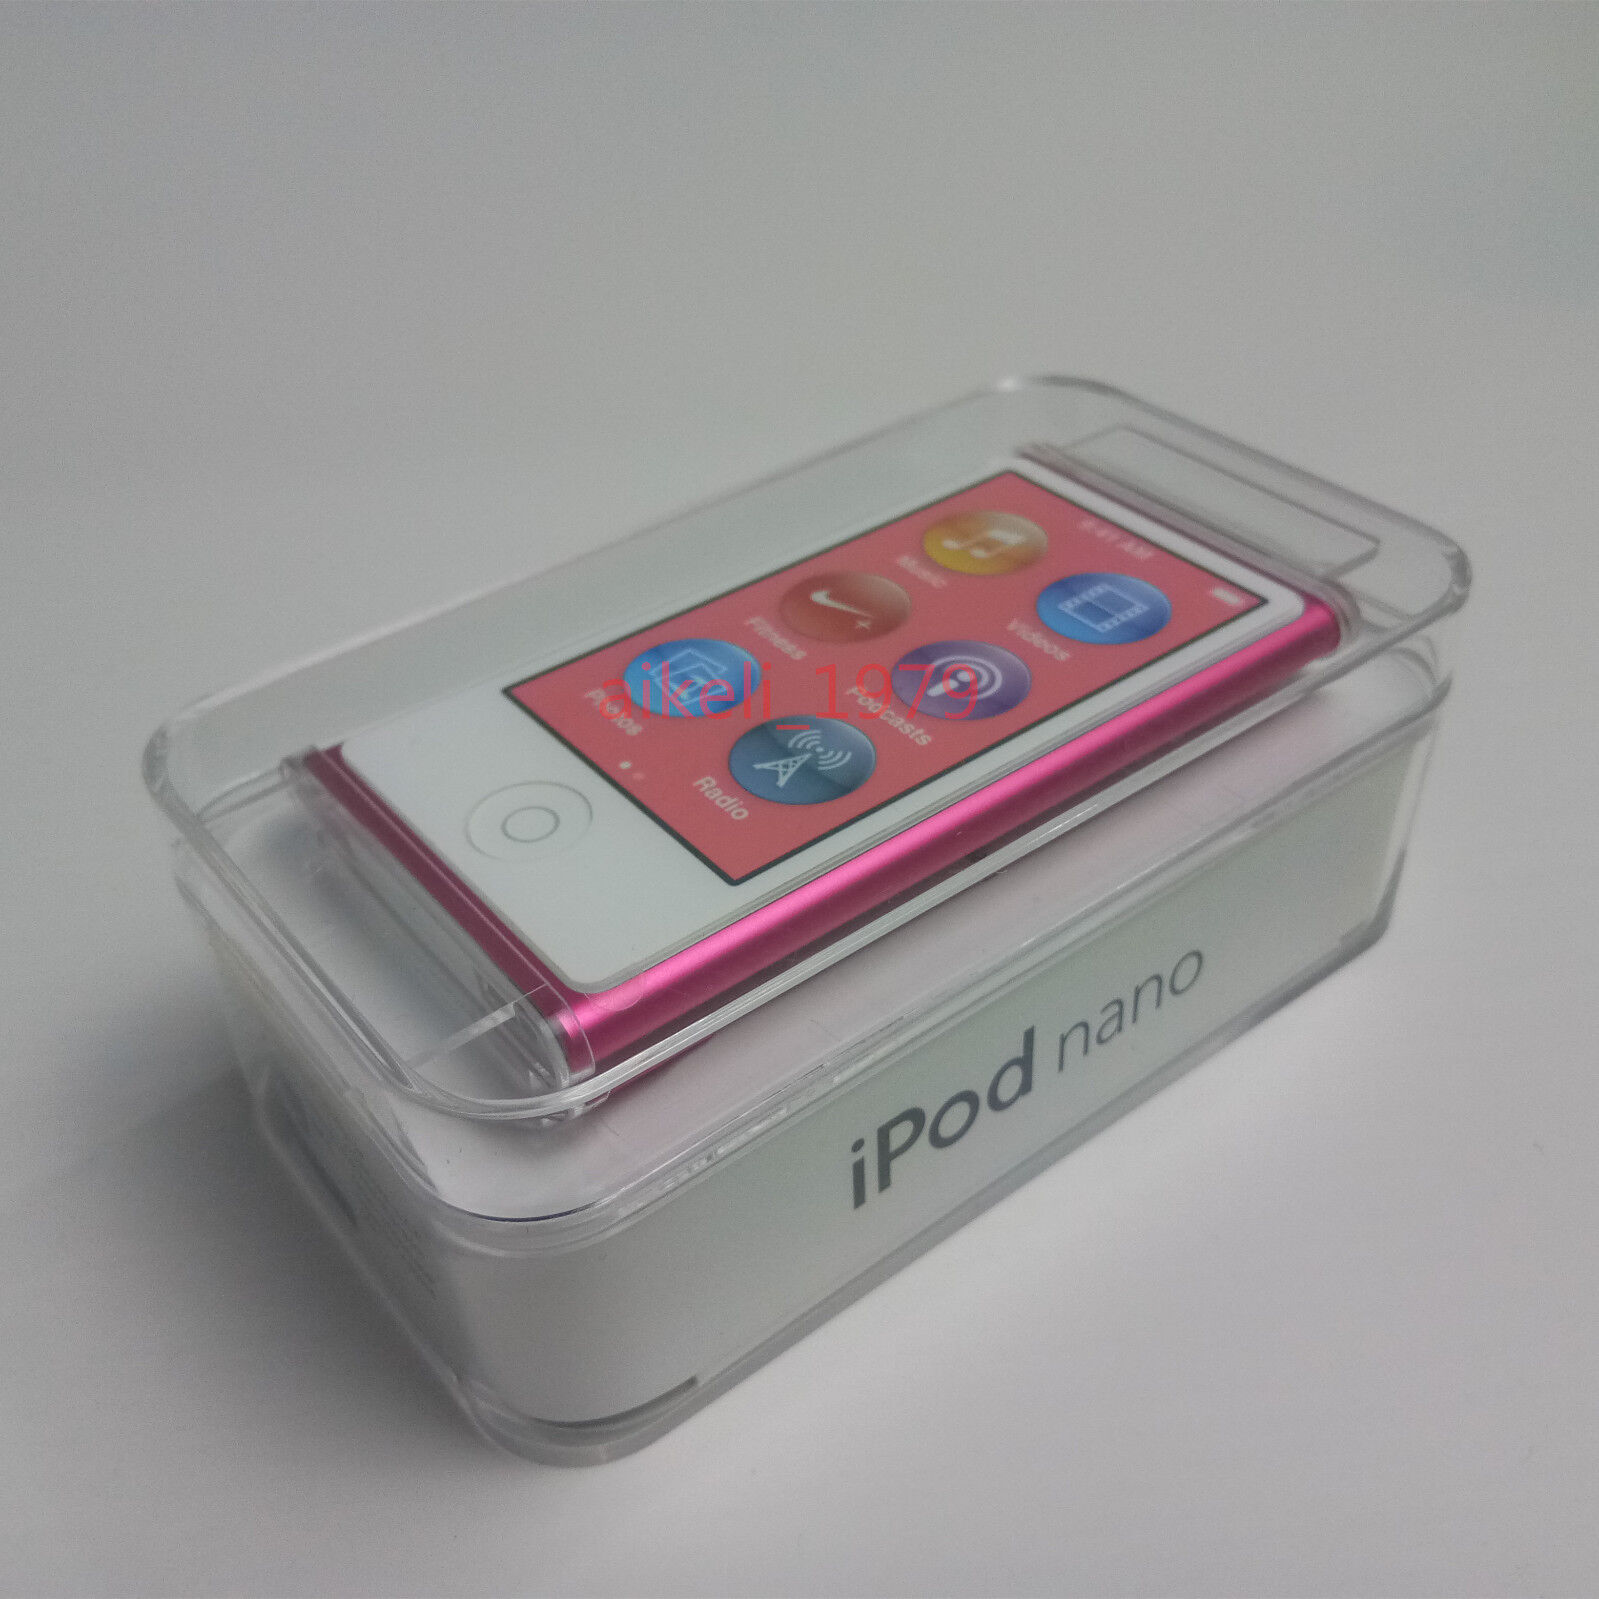 Apple iPod nano 7th Generation Pink (16 GB) for sale online | eBay